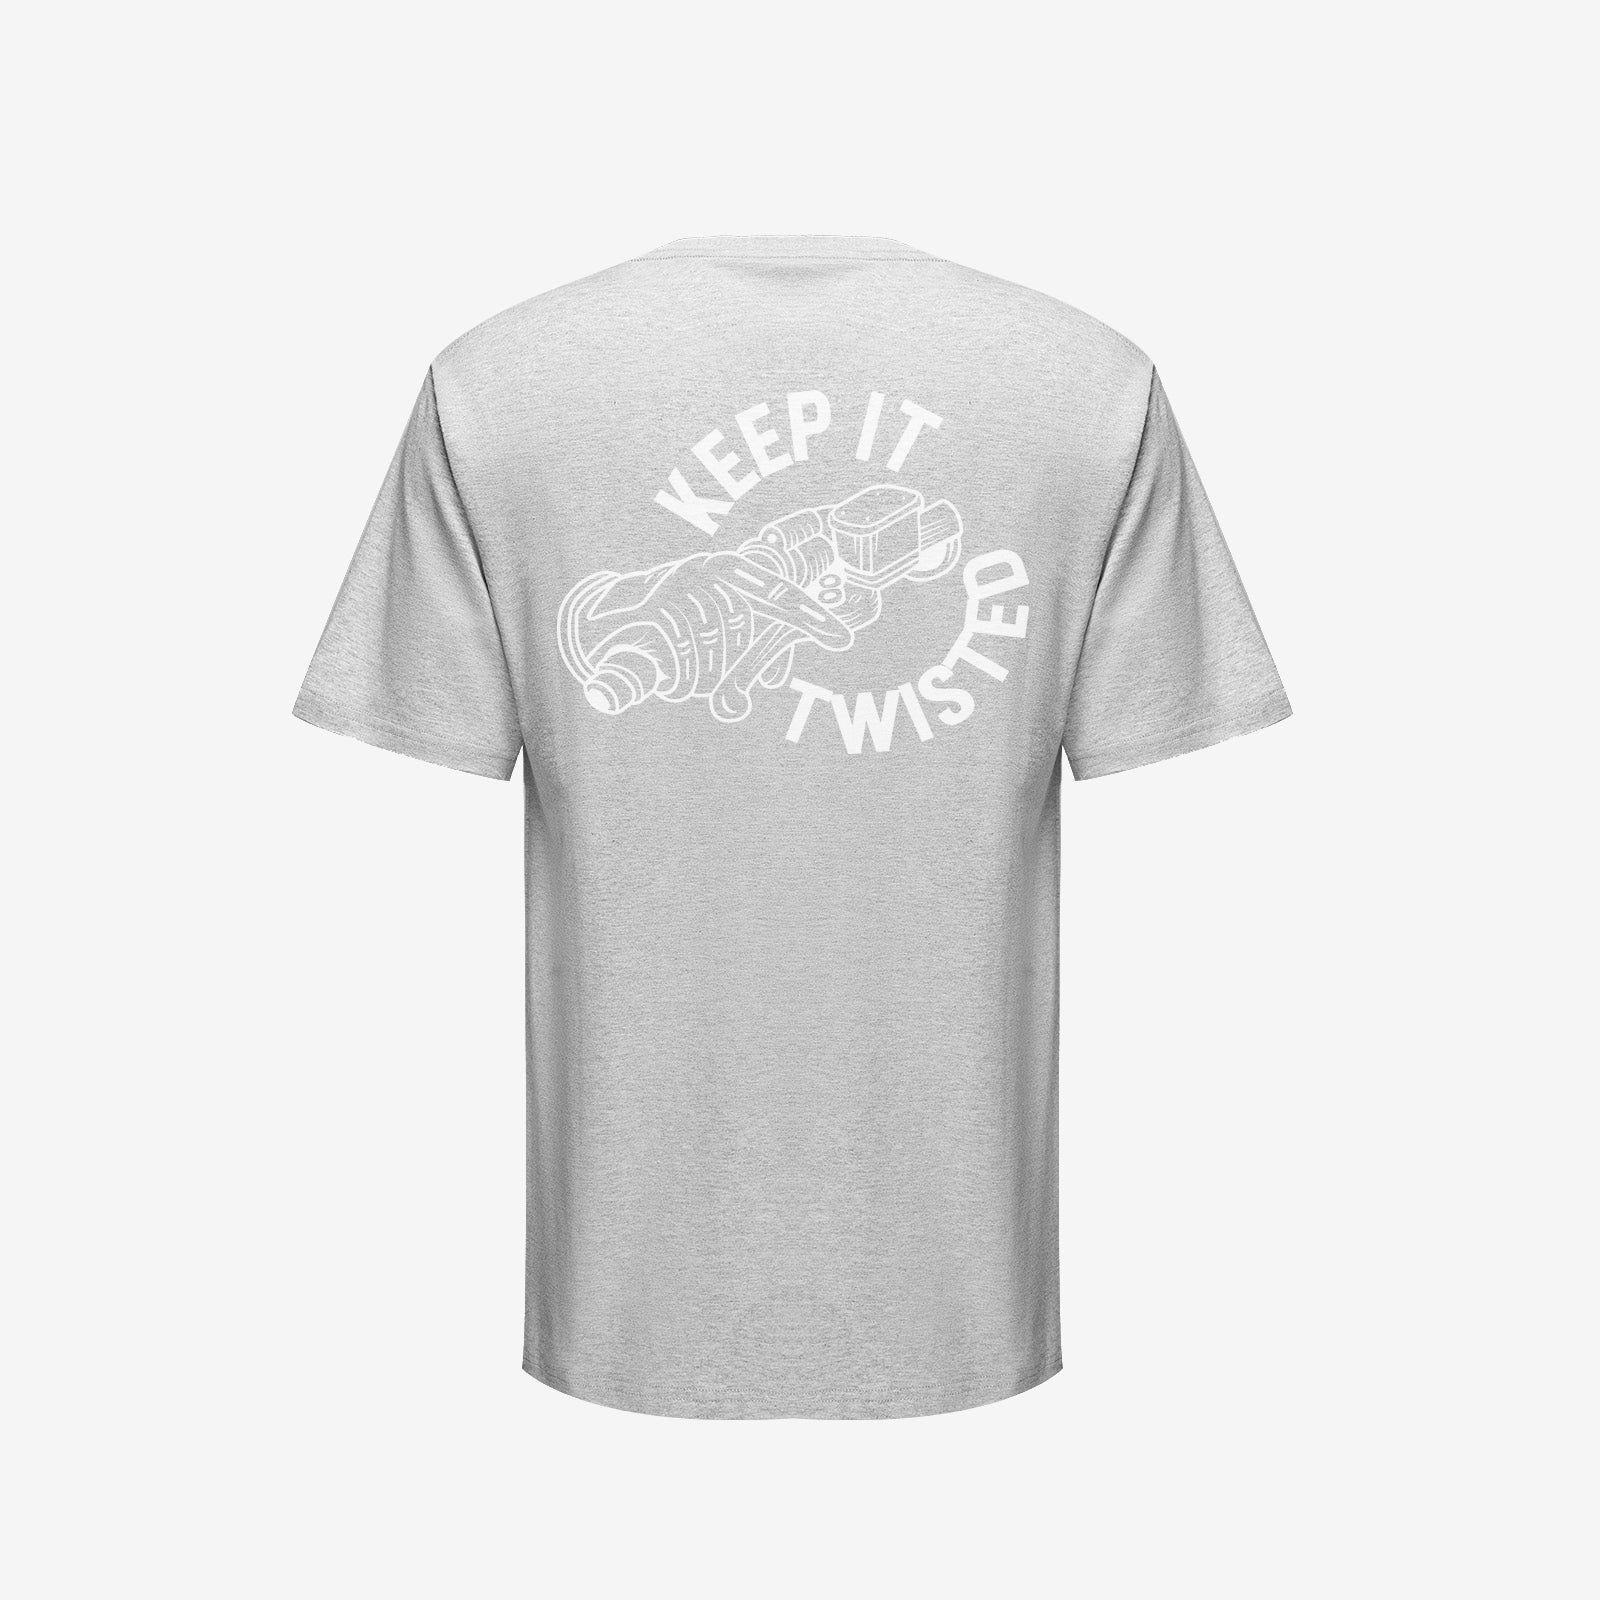 Uprandy Keep It Twisted Printed Casual Men T-Shirt - Chicyea